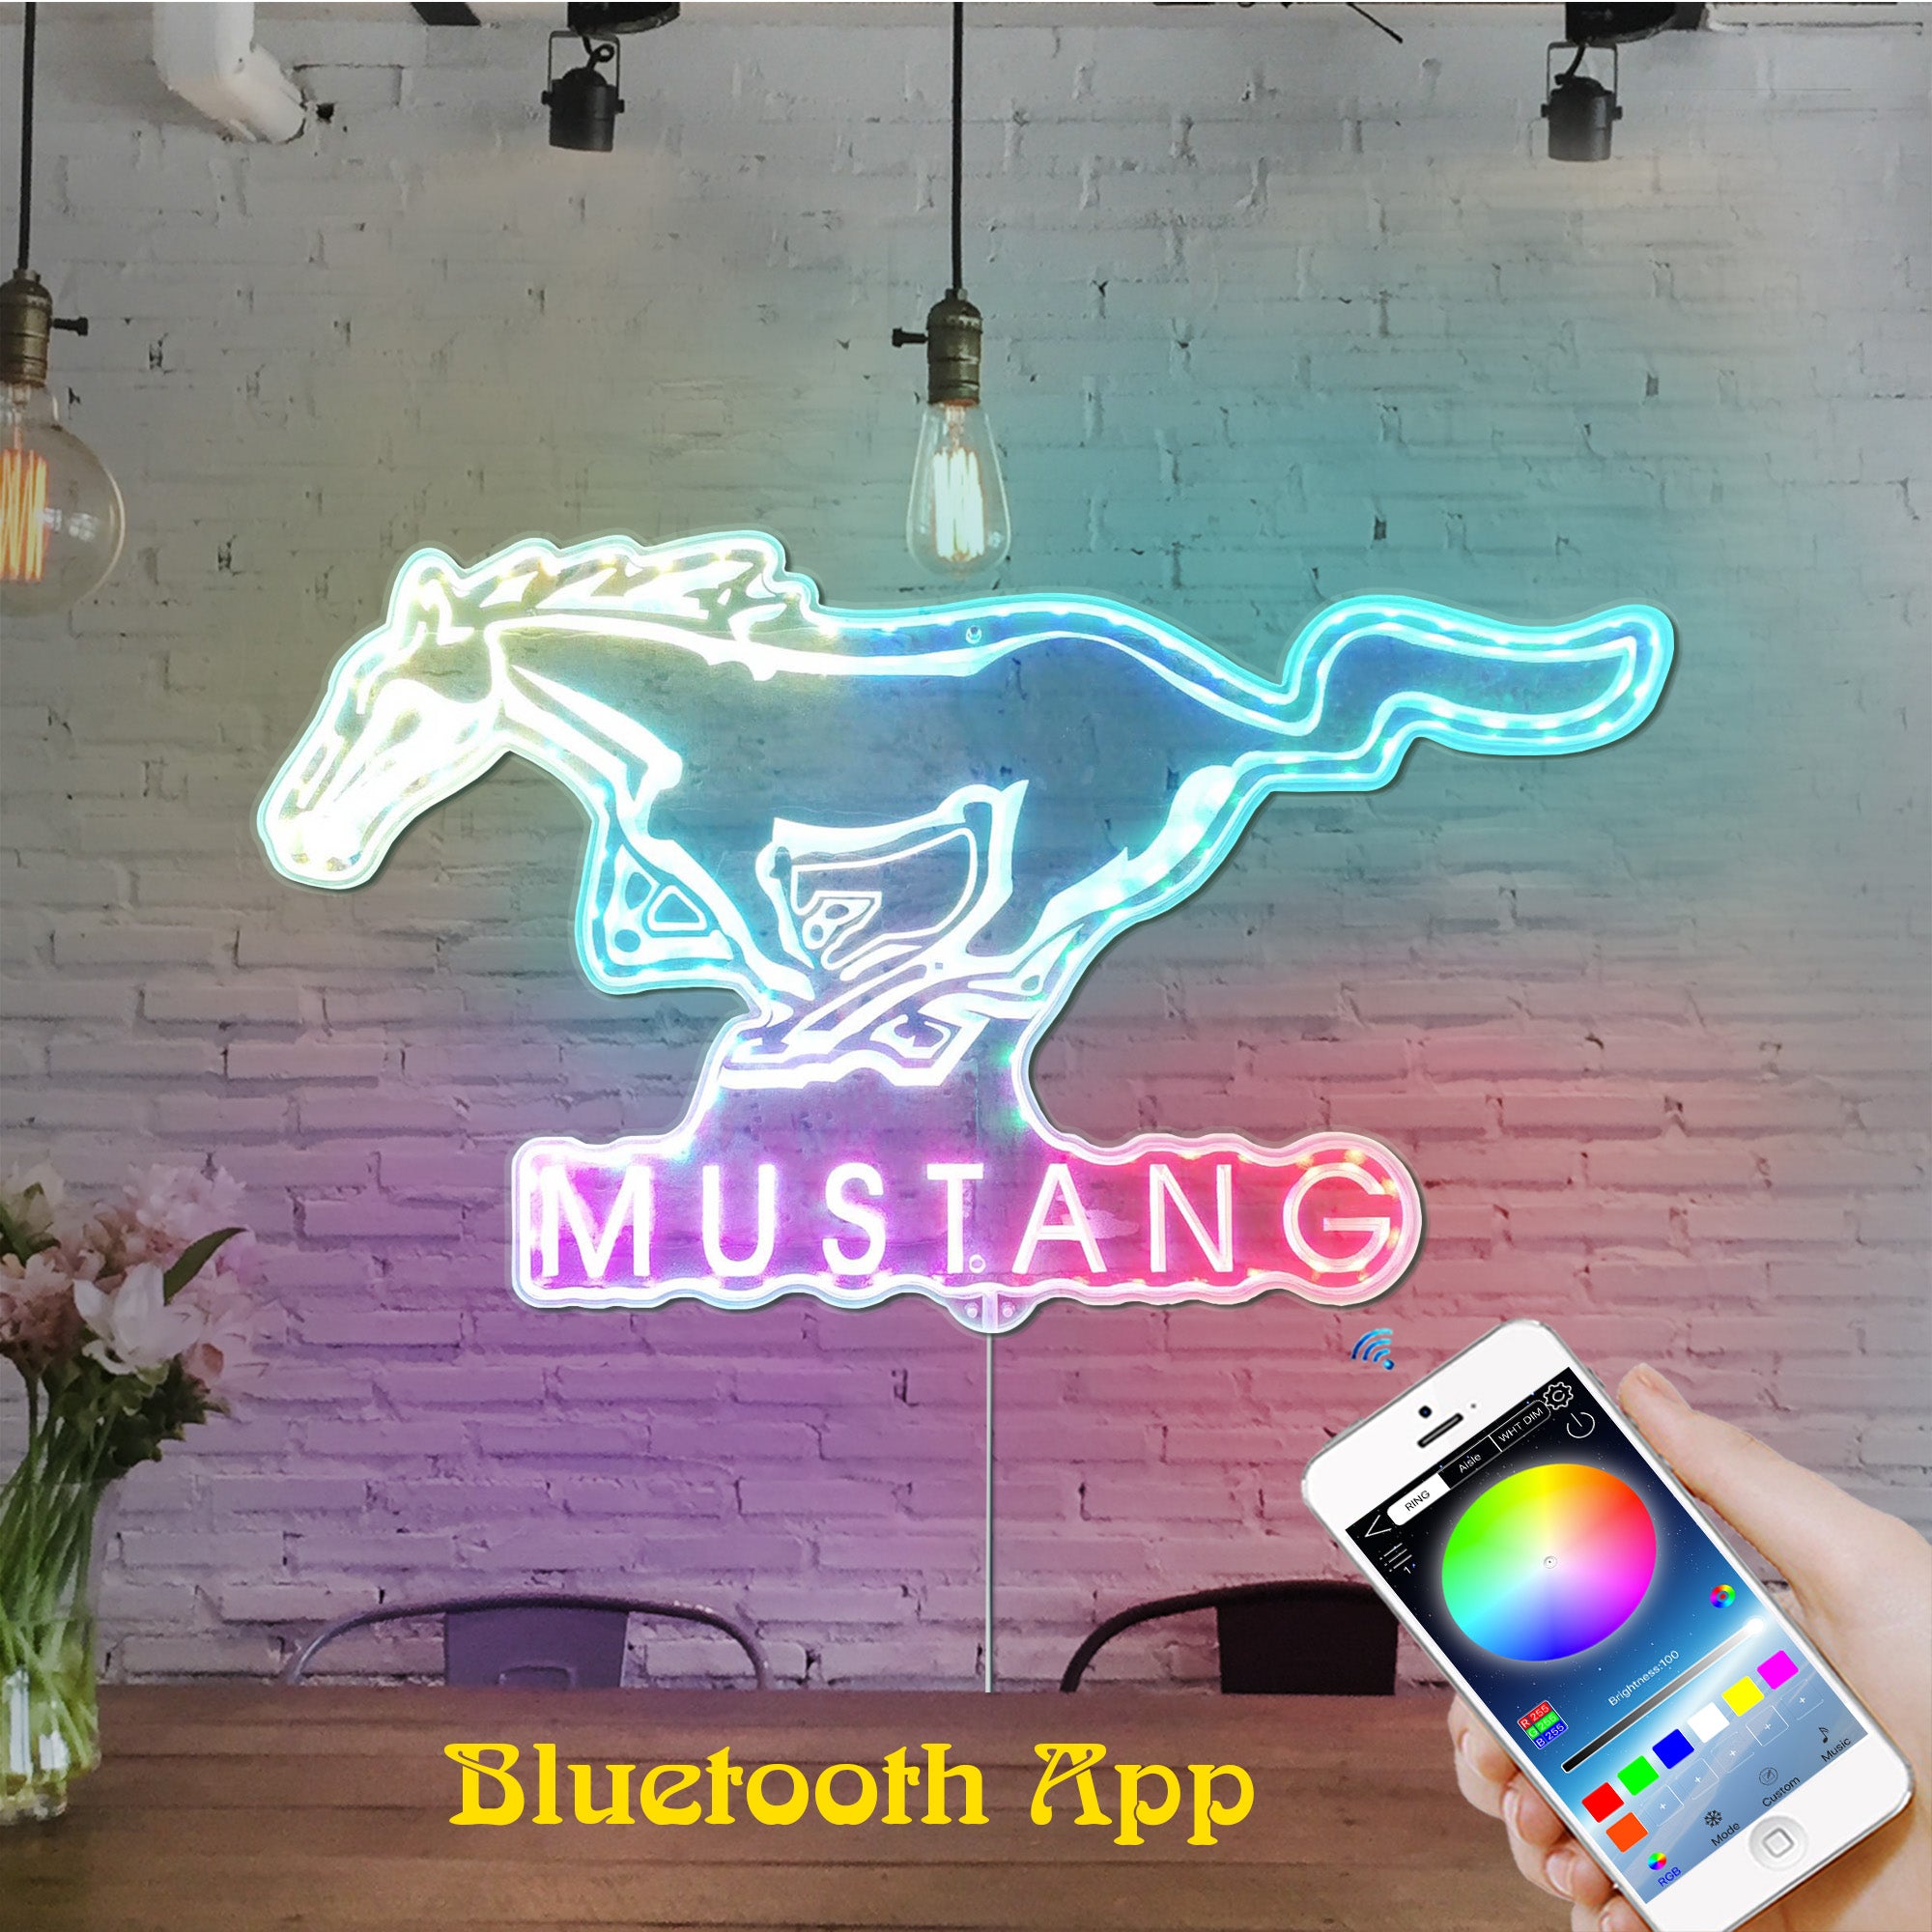 Mustang Dynamic RGB Edge Lit LED Sign